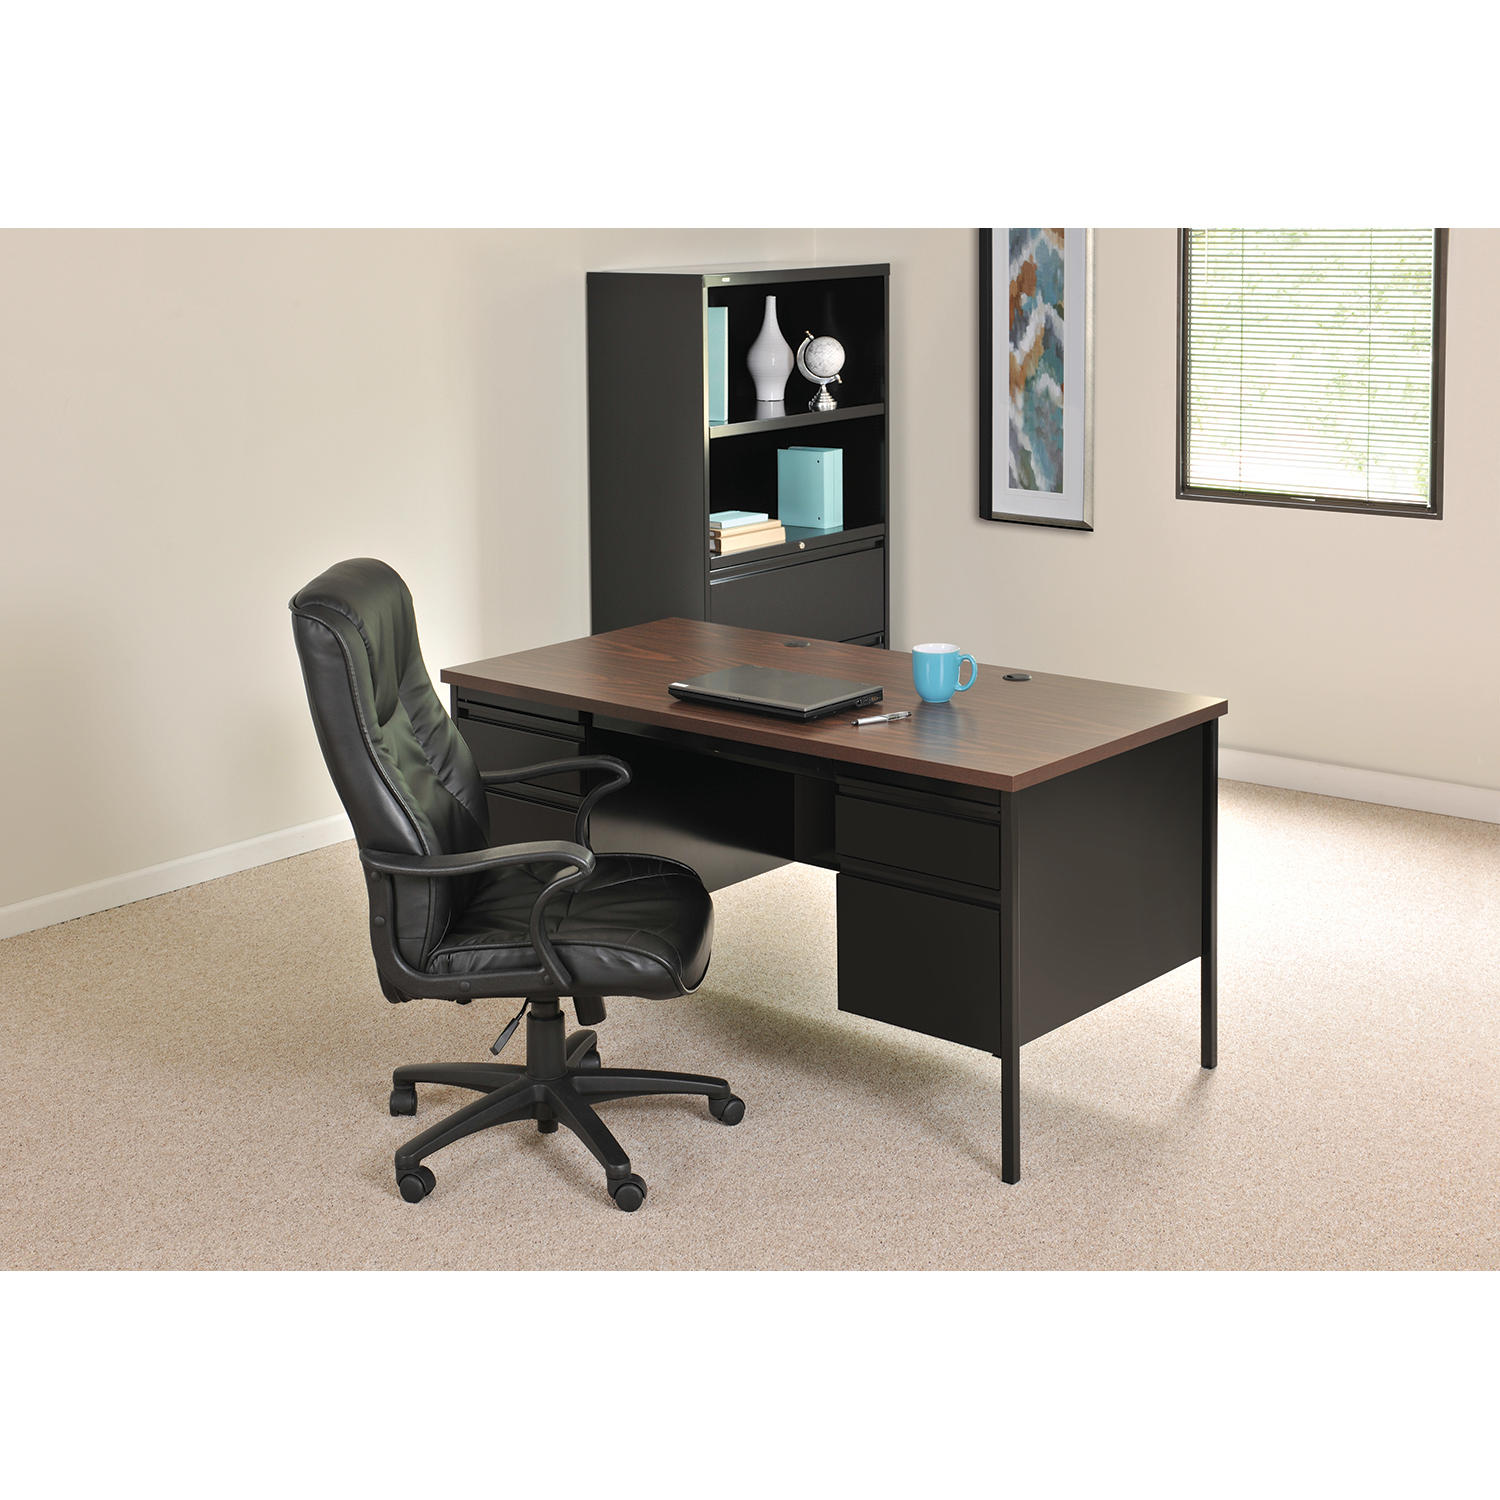 Hirsh Double Pedestal Office Desk with Center Drawer, Black/Walnut